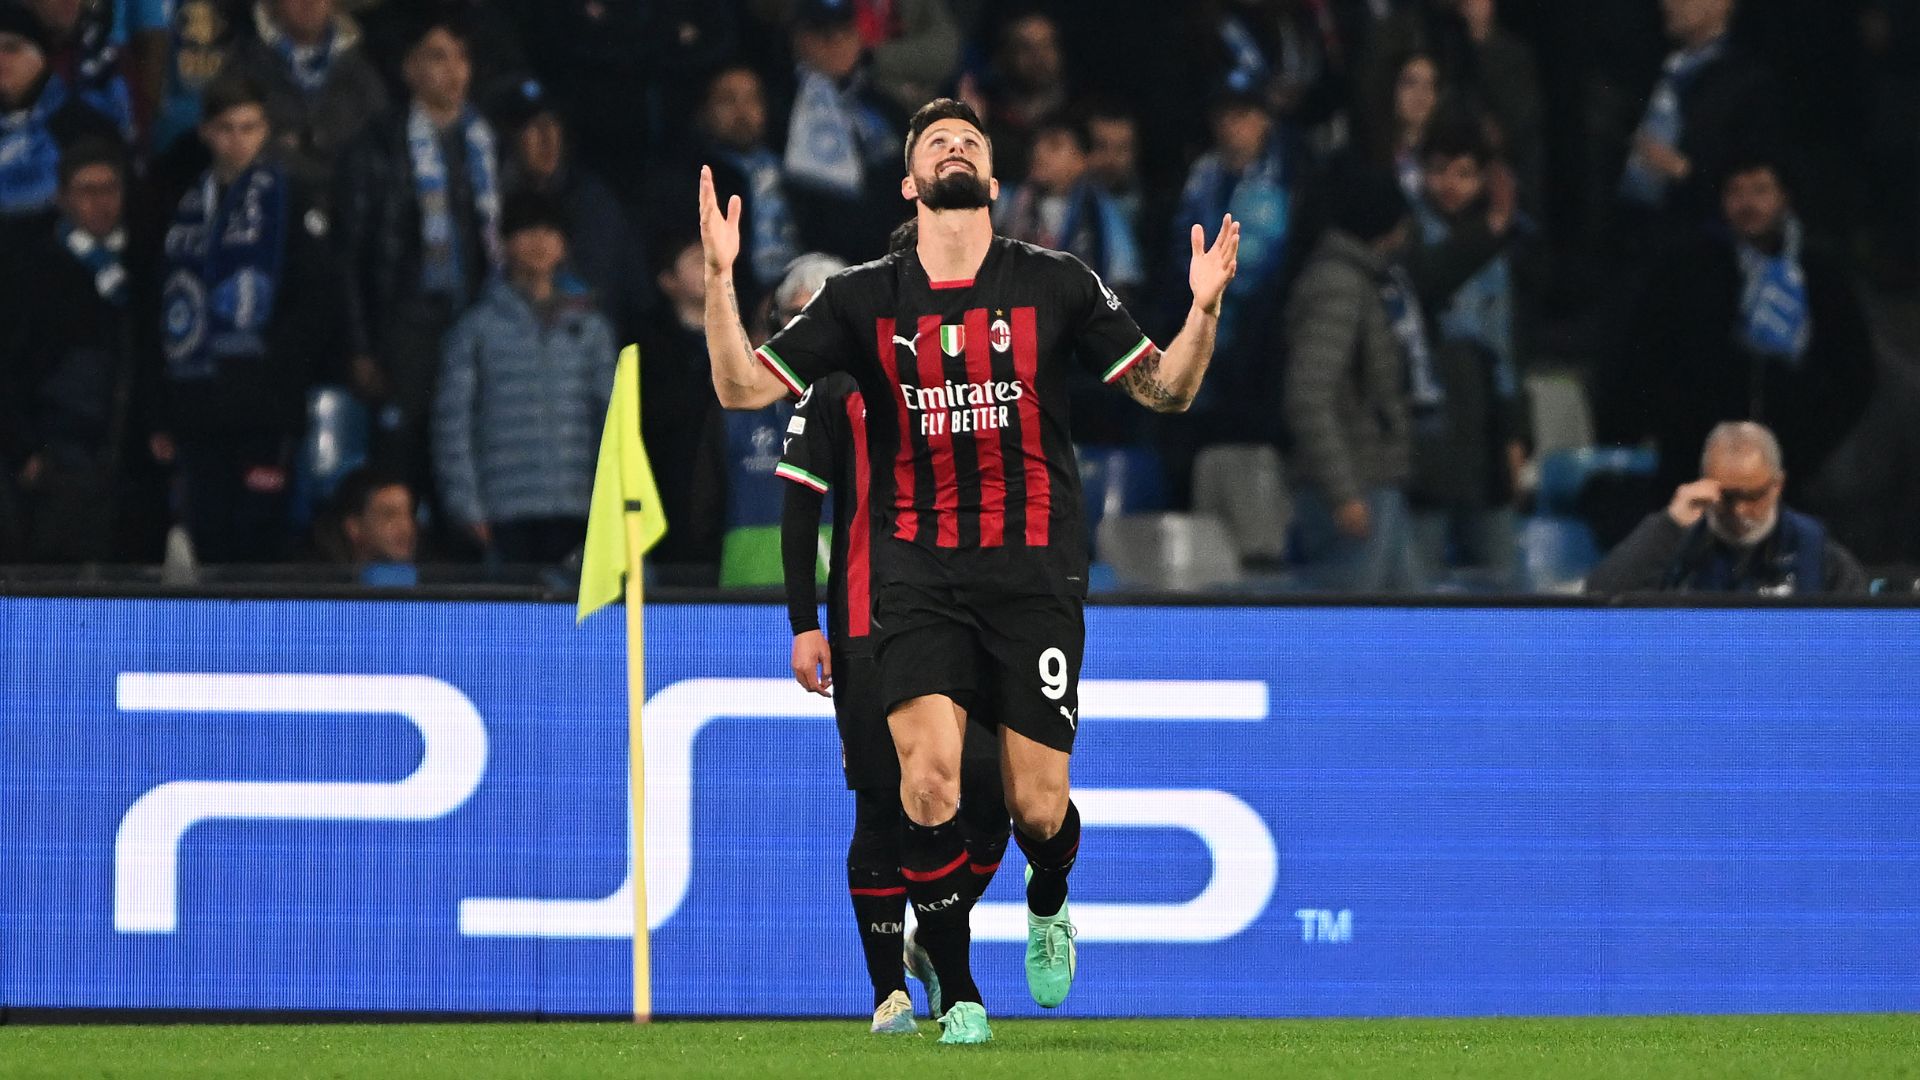 Giroud comemorando o gol marcado contra o Napoli (Crédito: Getty Images)